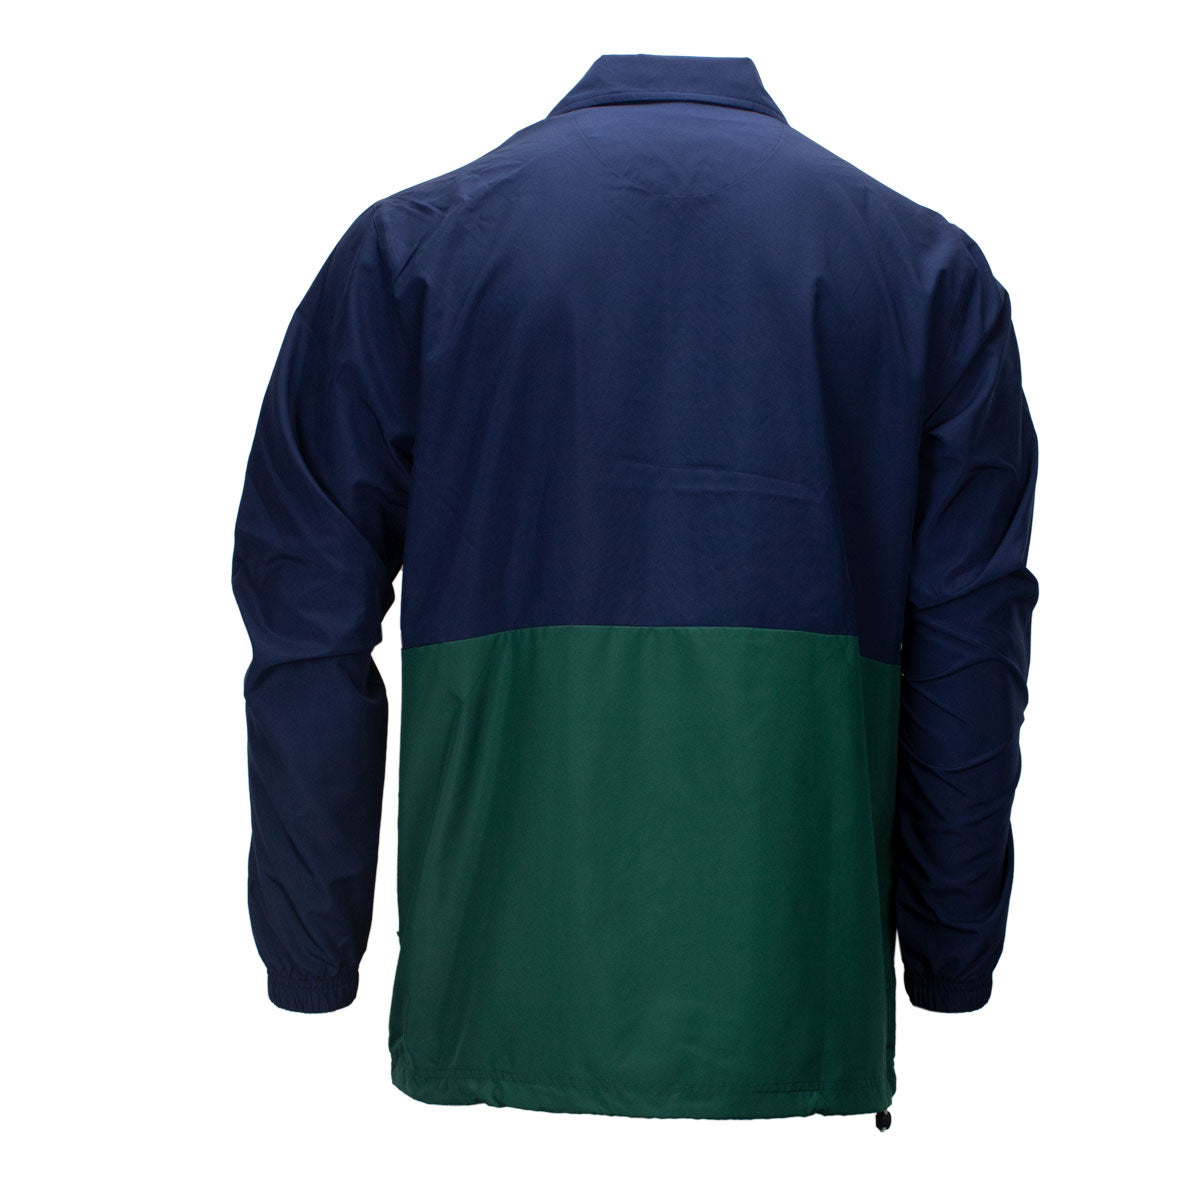 Adidas Originals Pullover Jacket PULOVERJCKT Herren langarm Shirt CE1810 - Brand Dealers Arena e.K. - BDA24